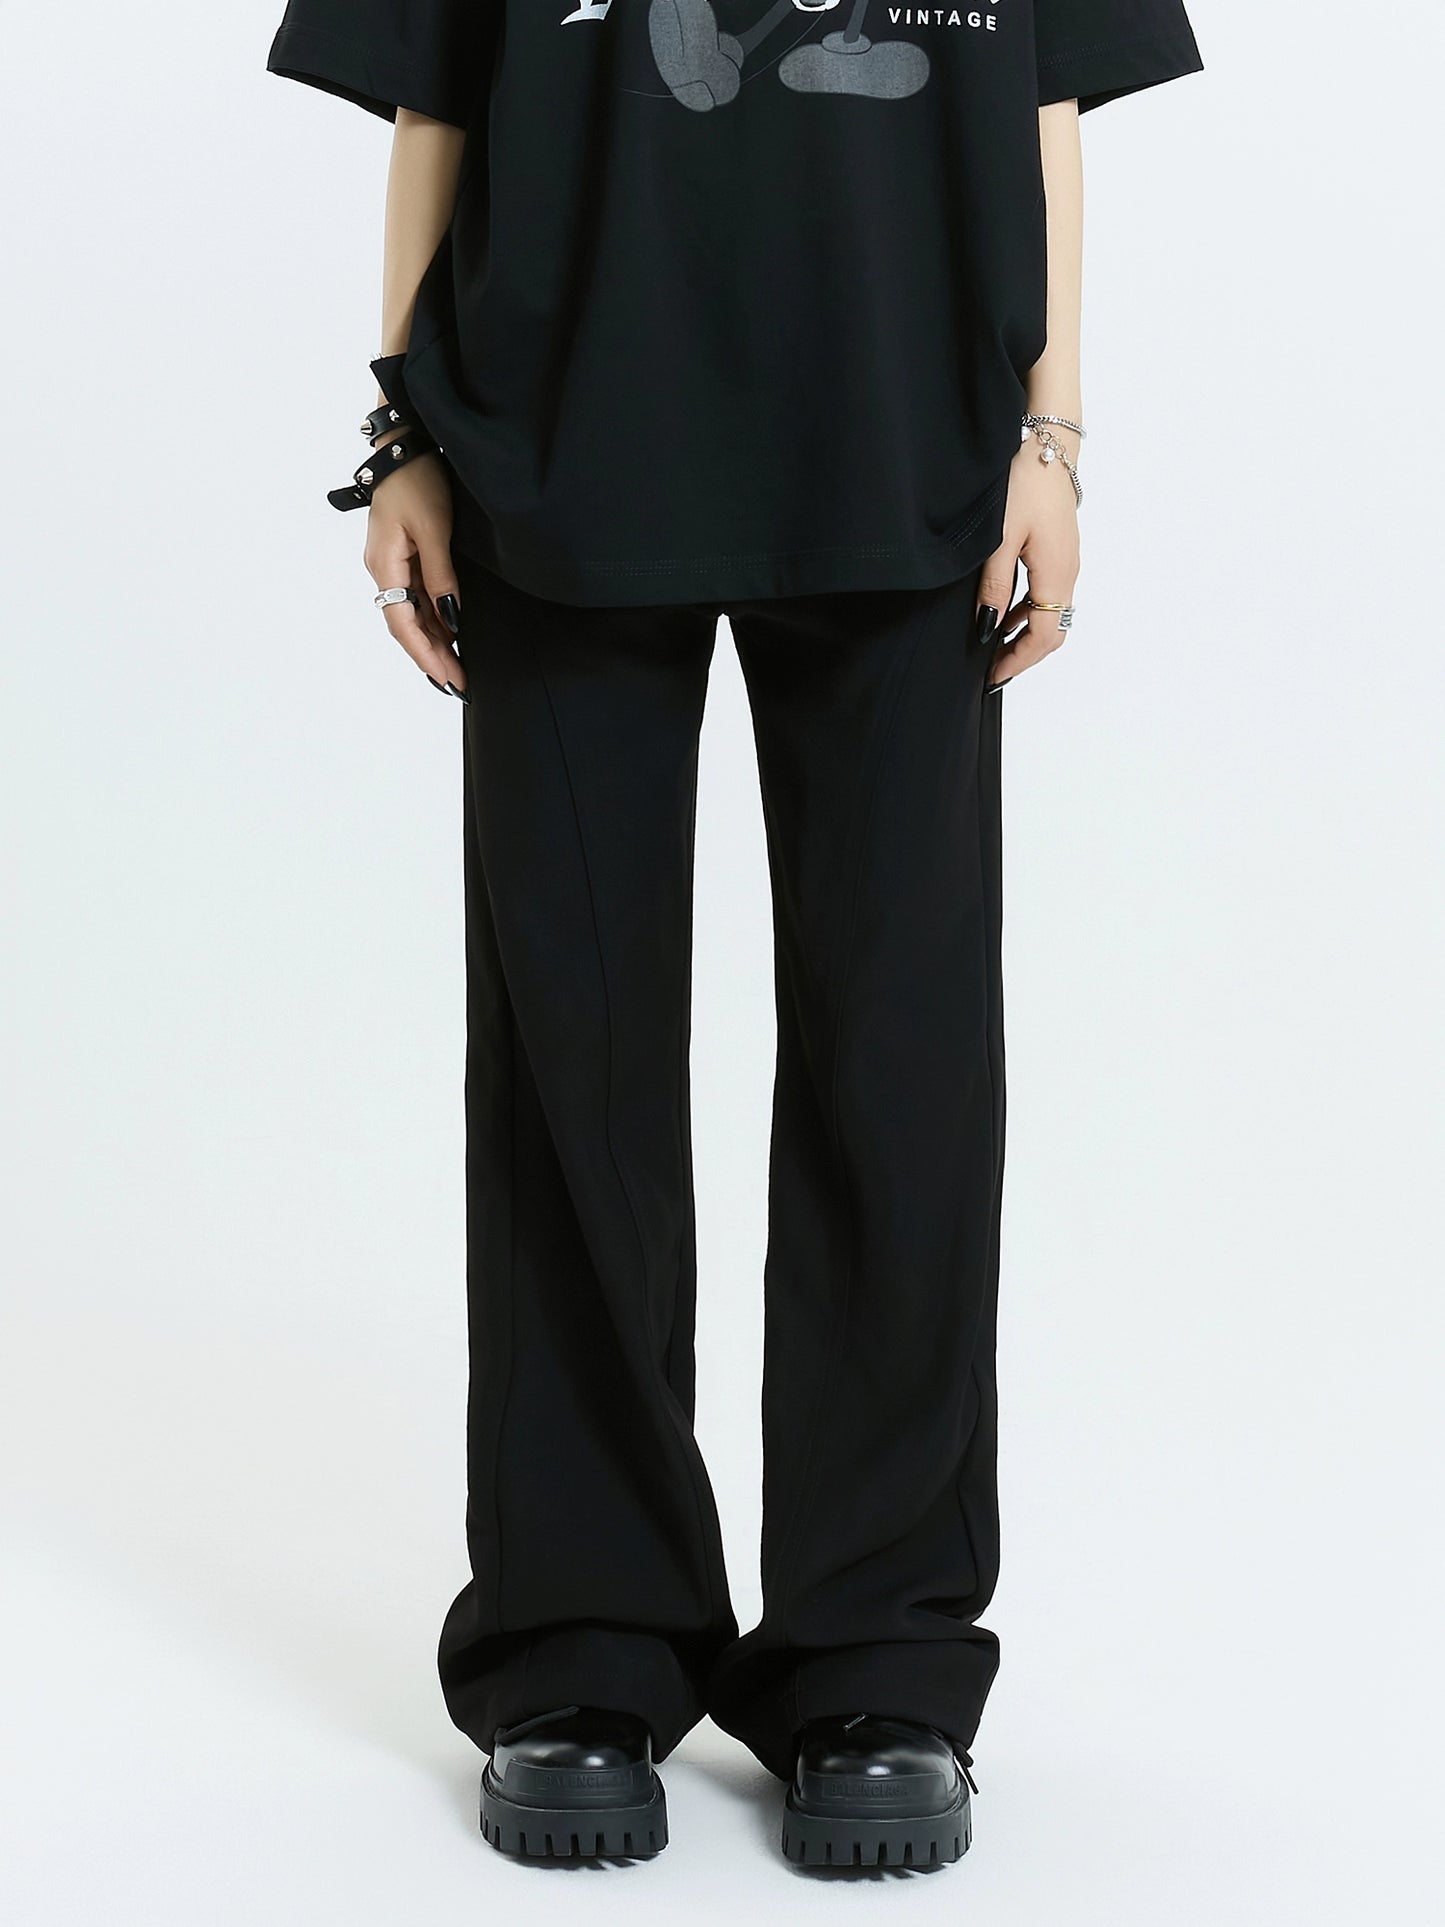 MICHINNYON basic straight-leg casual panel pant for men and women spring/summer premium draped bootflared trousers